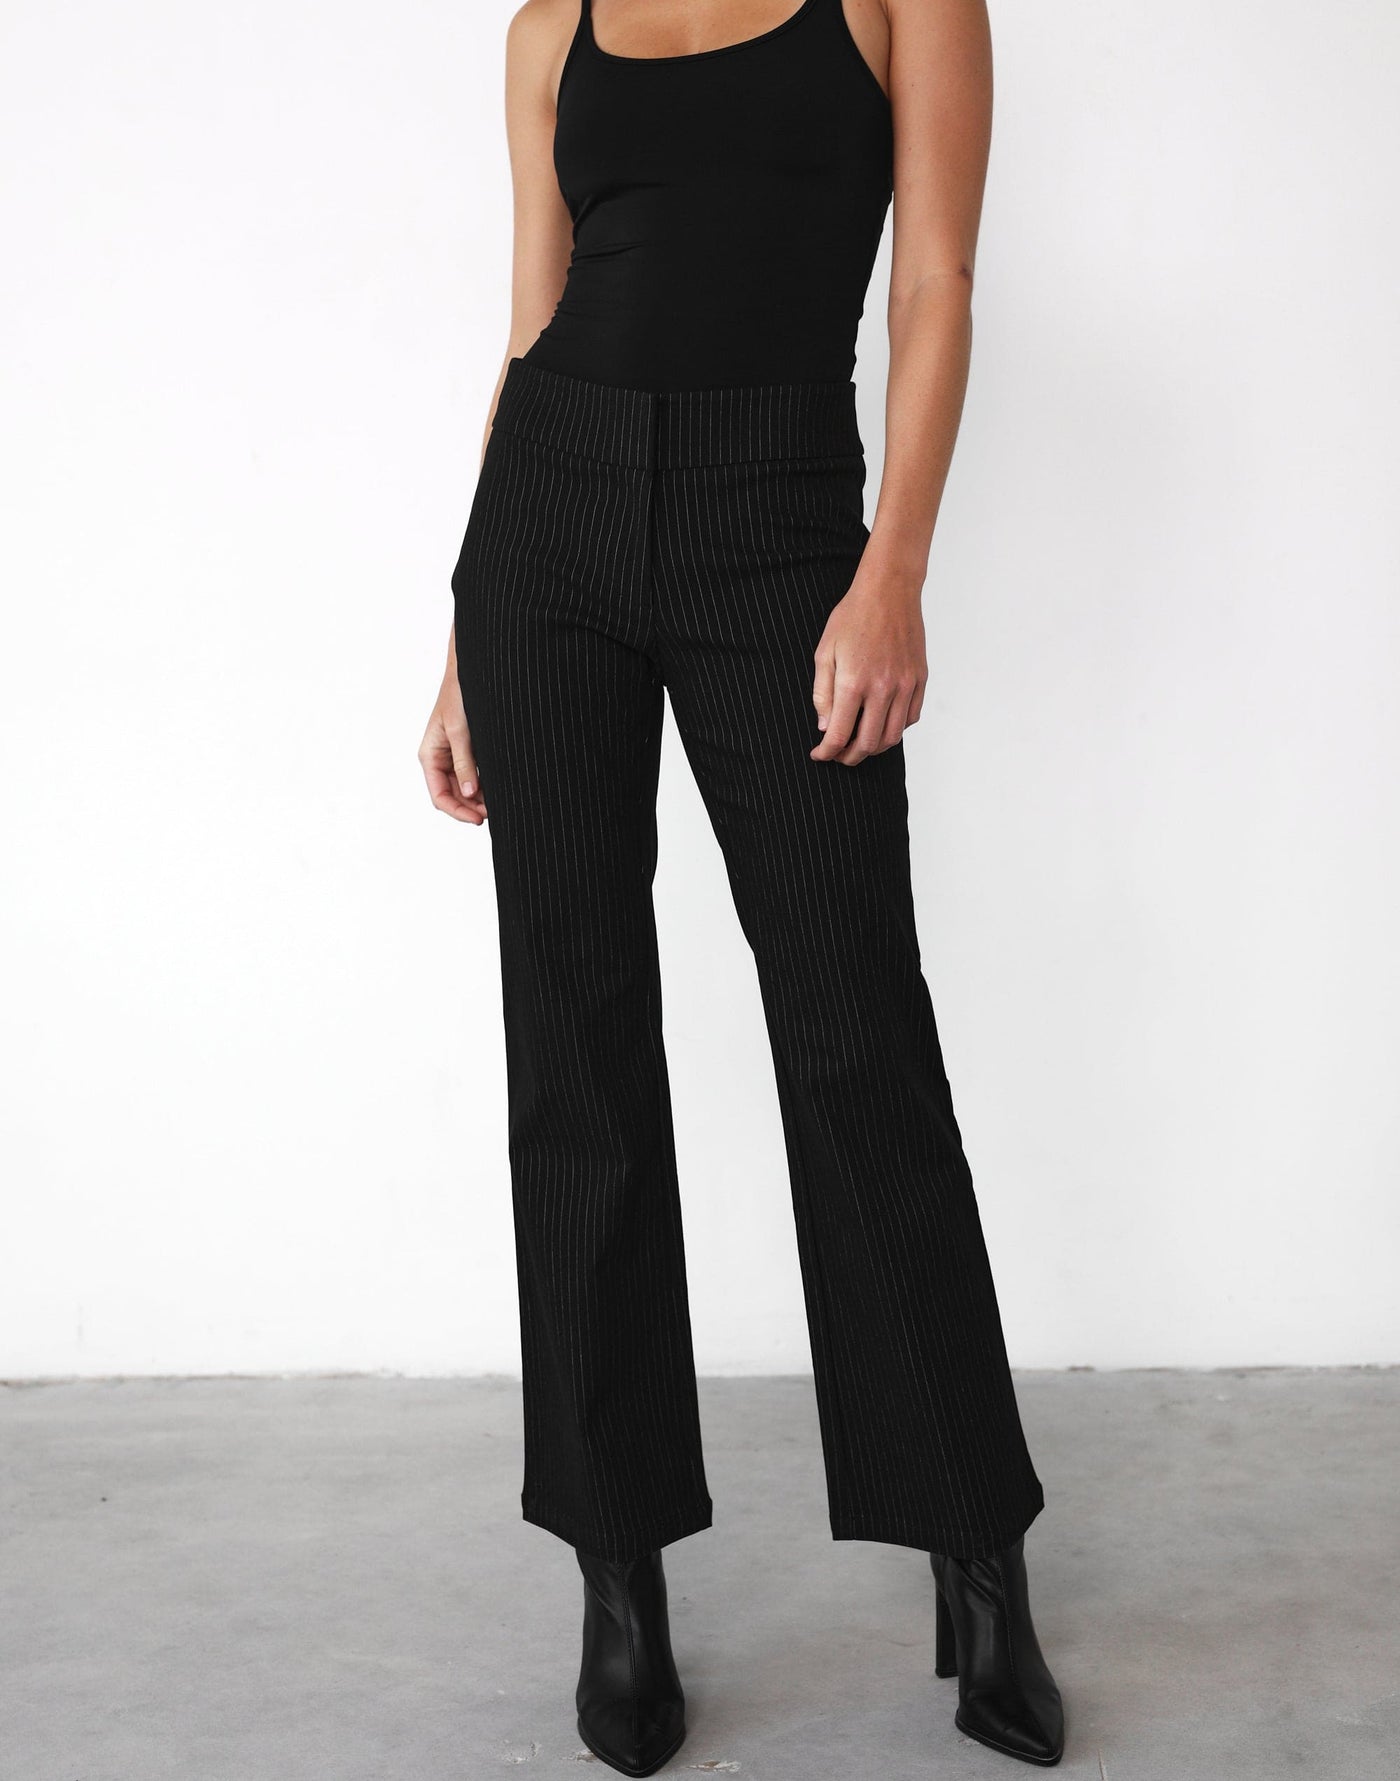 Allie Pants (Black Pinstripe) - Black Pinstripe Mid Waisted Pants - Women's Pants - Charcoal Clothing